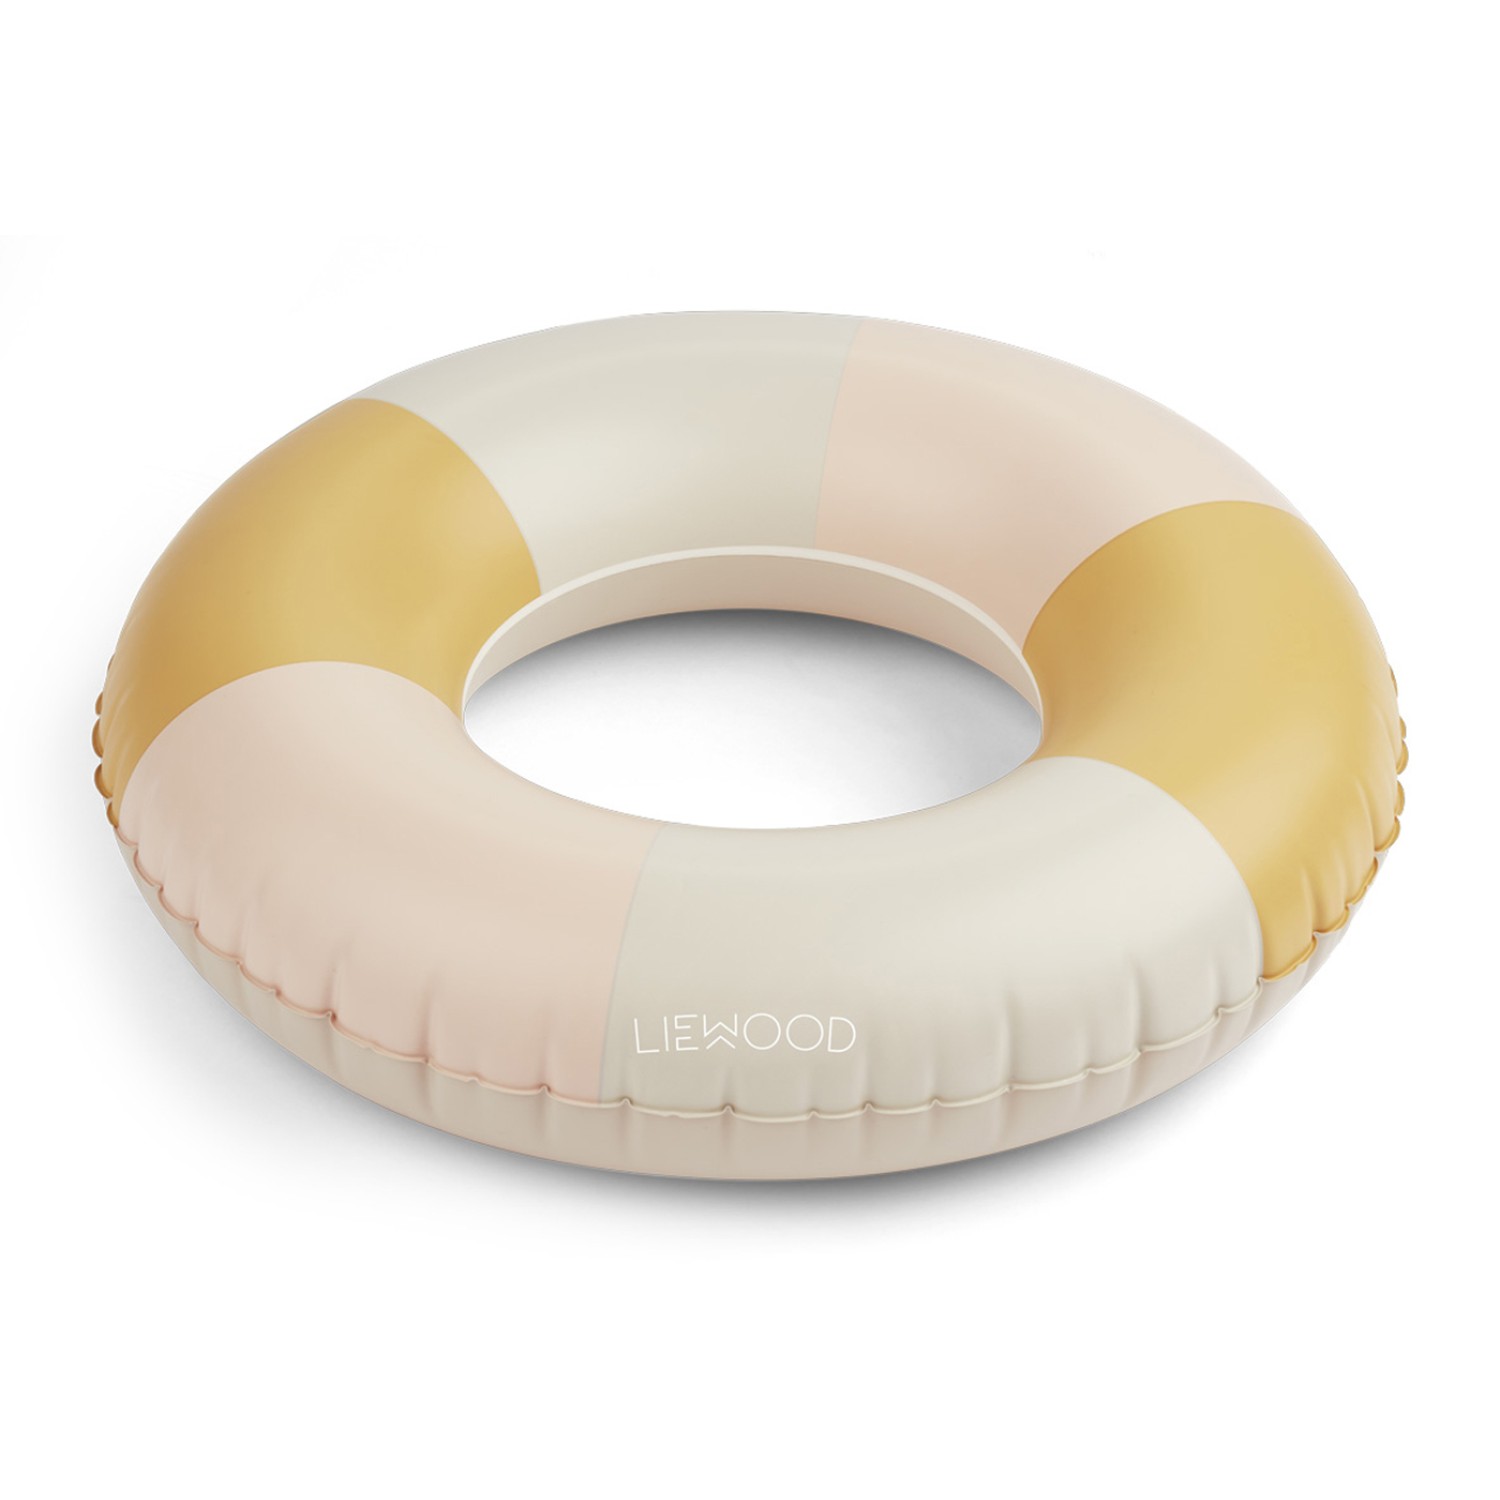 Donna swim ring - Stripe: Peach/sandy/yellow mellow